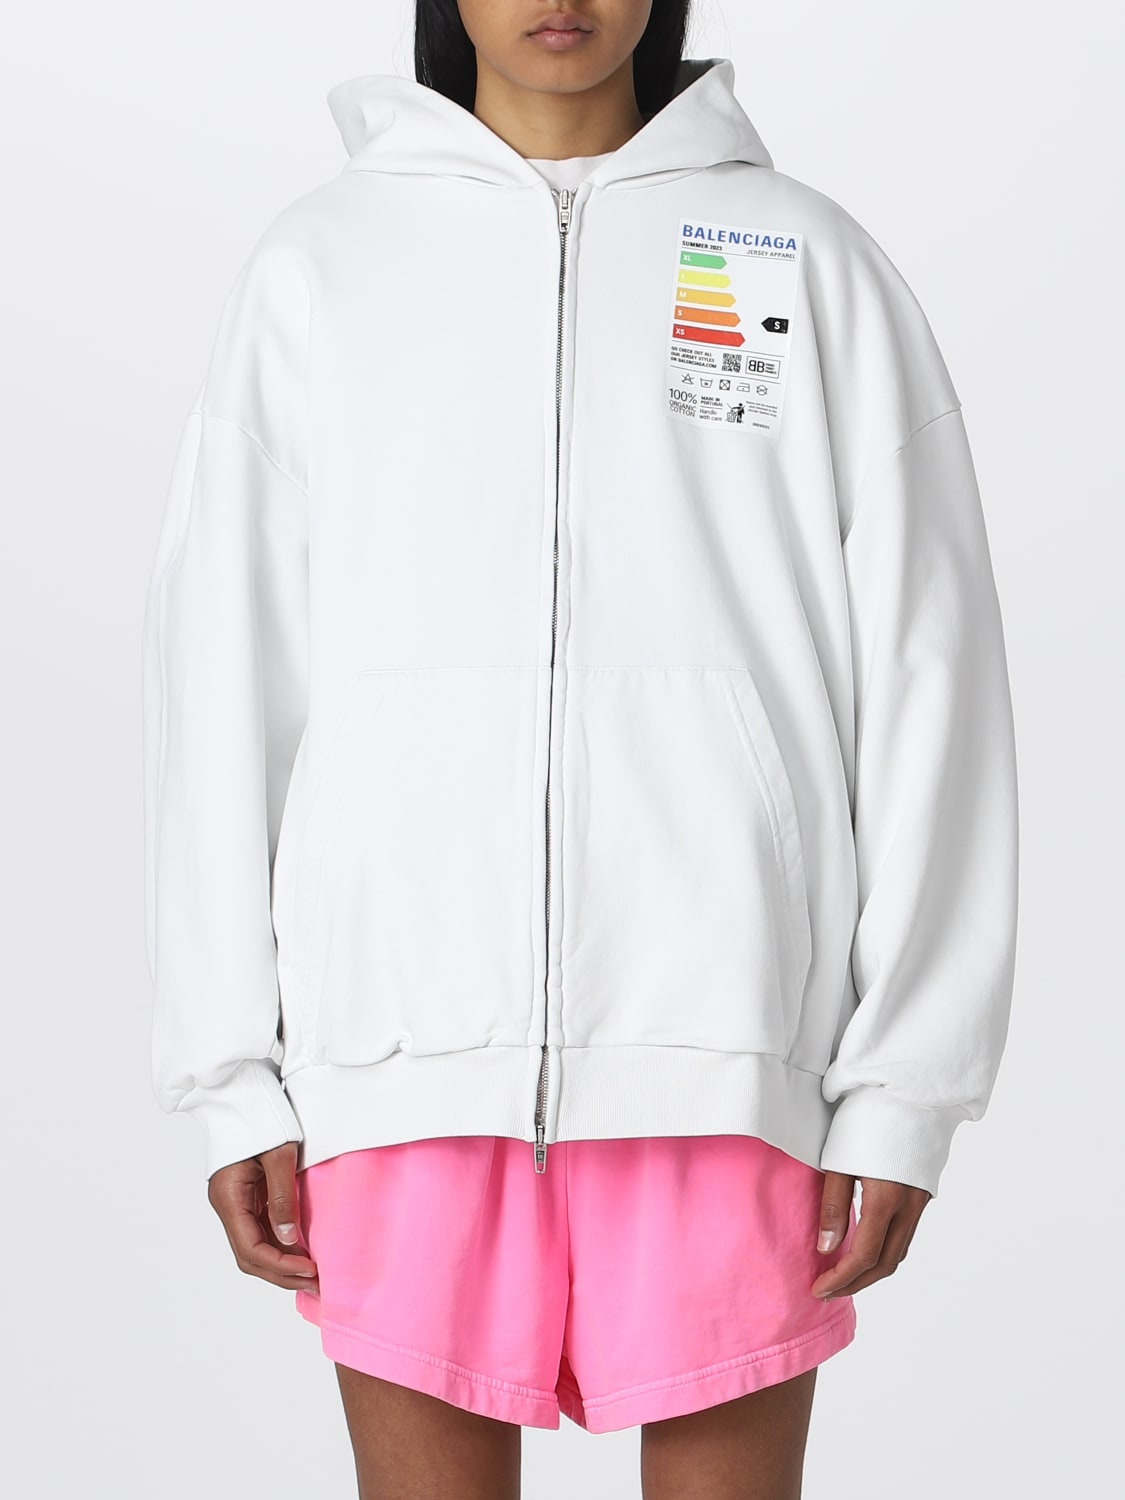 BALENCIAGA: sweatshirt for woman - White | Balenciaga sweatshirt 744454 TOVD6 online GIGLIO.COM